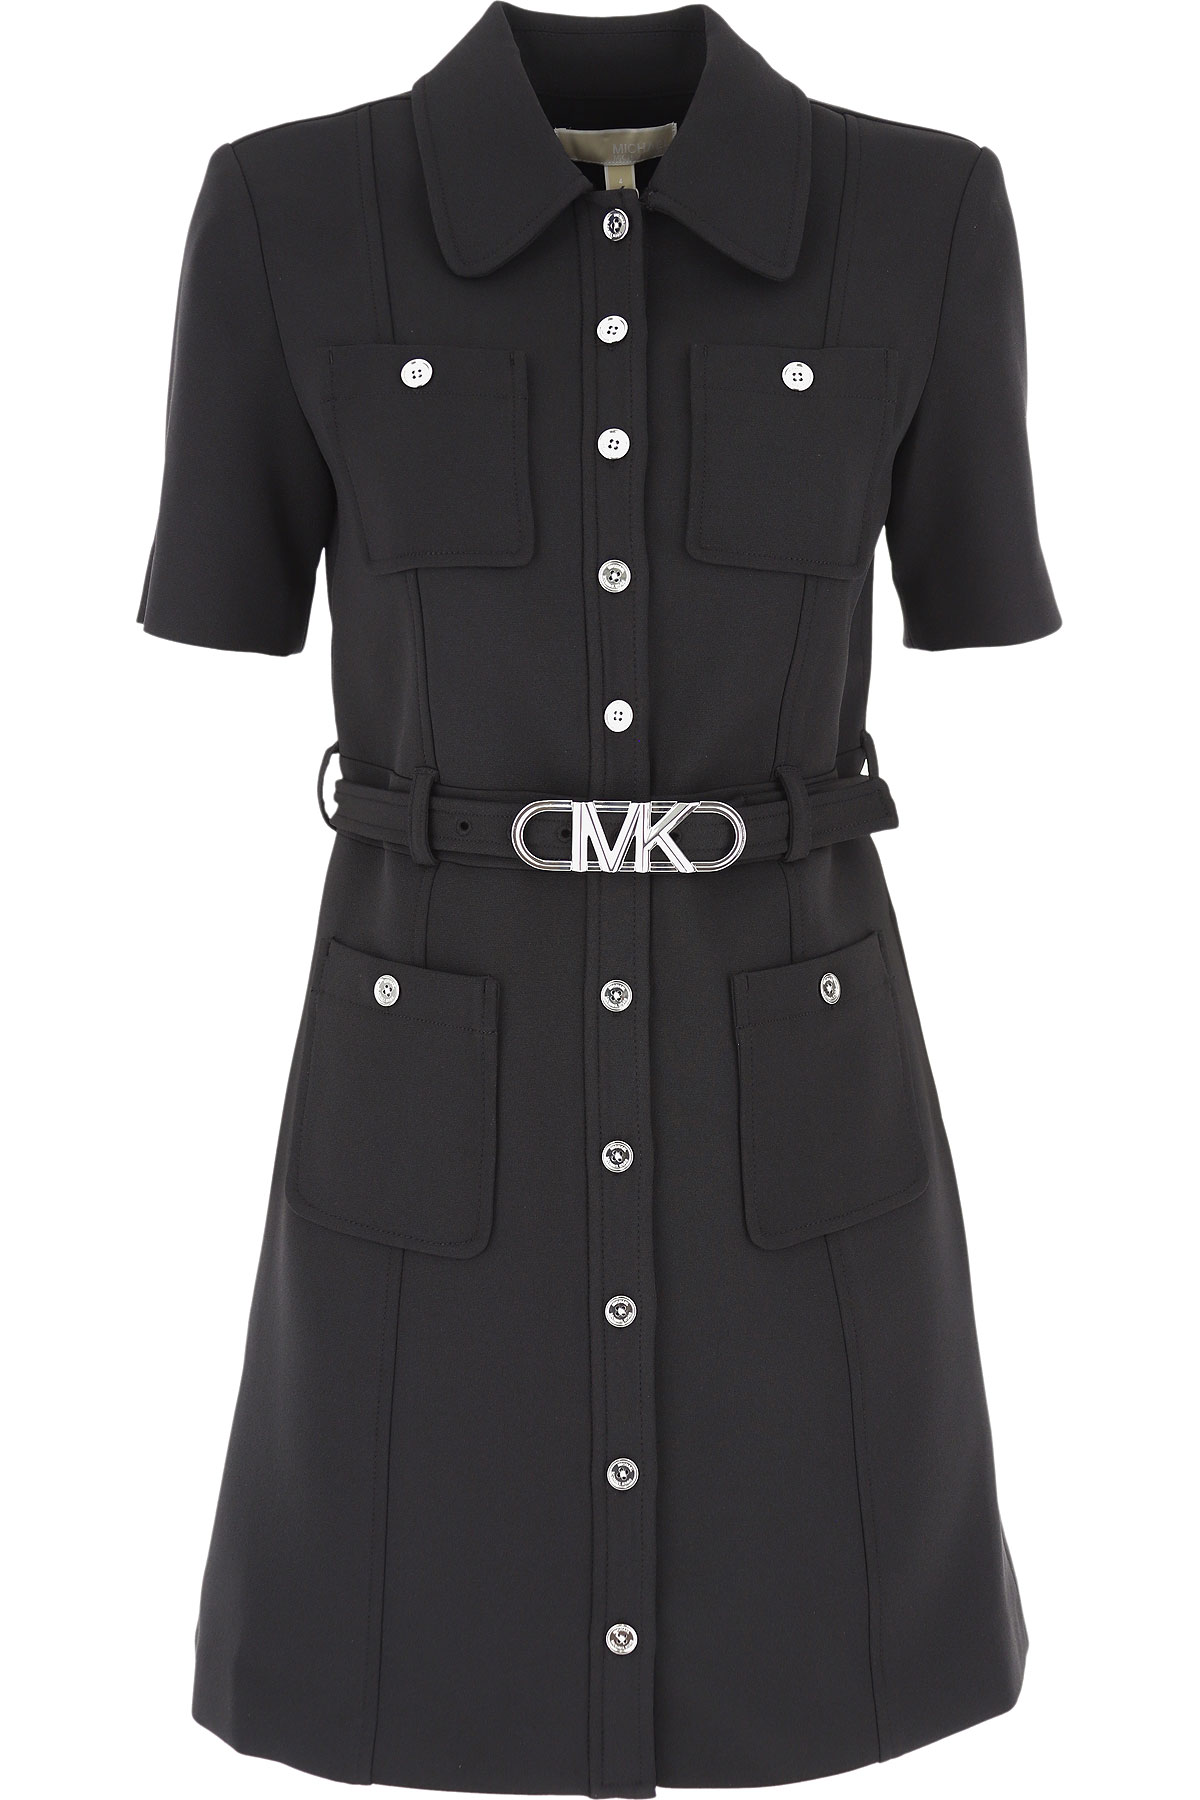 Womens Clothing Michael Kors, Style code: mr381gj3gz-001-